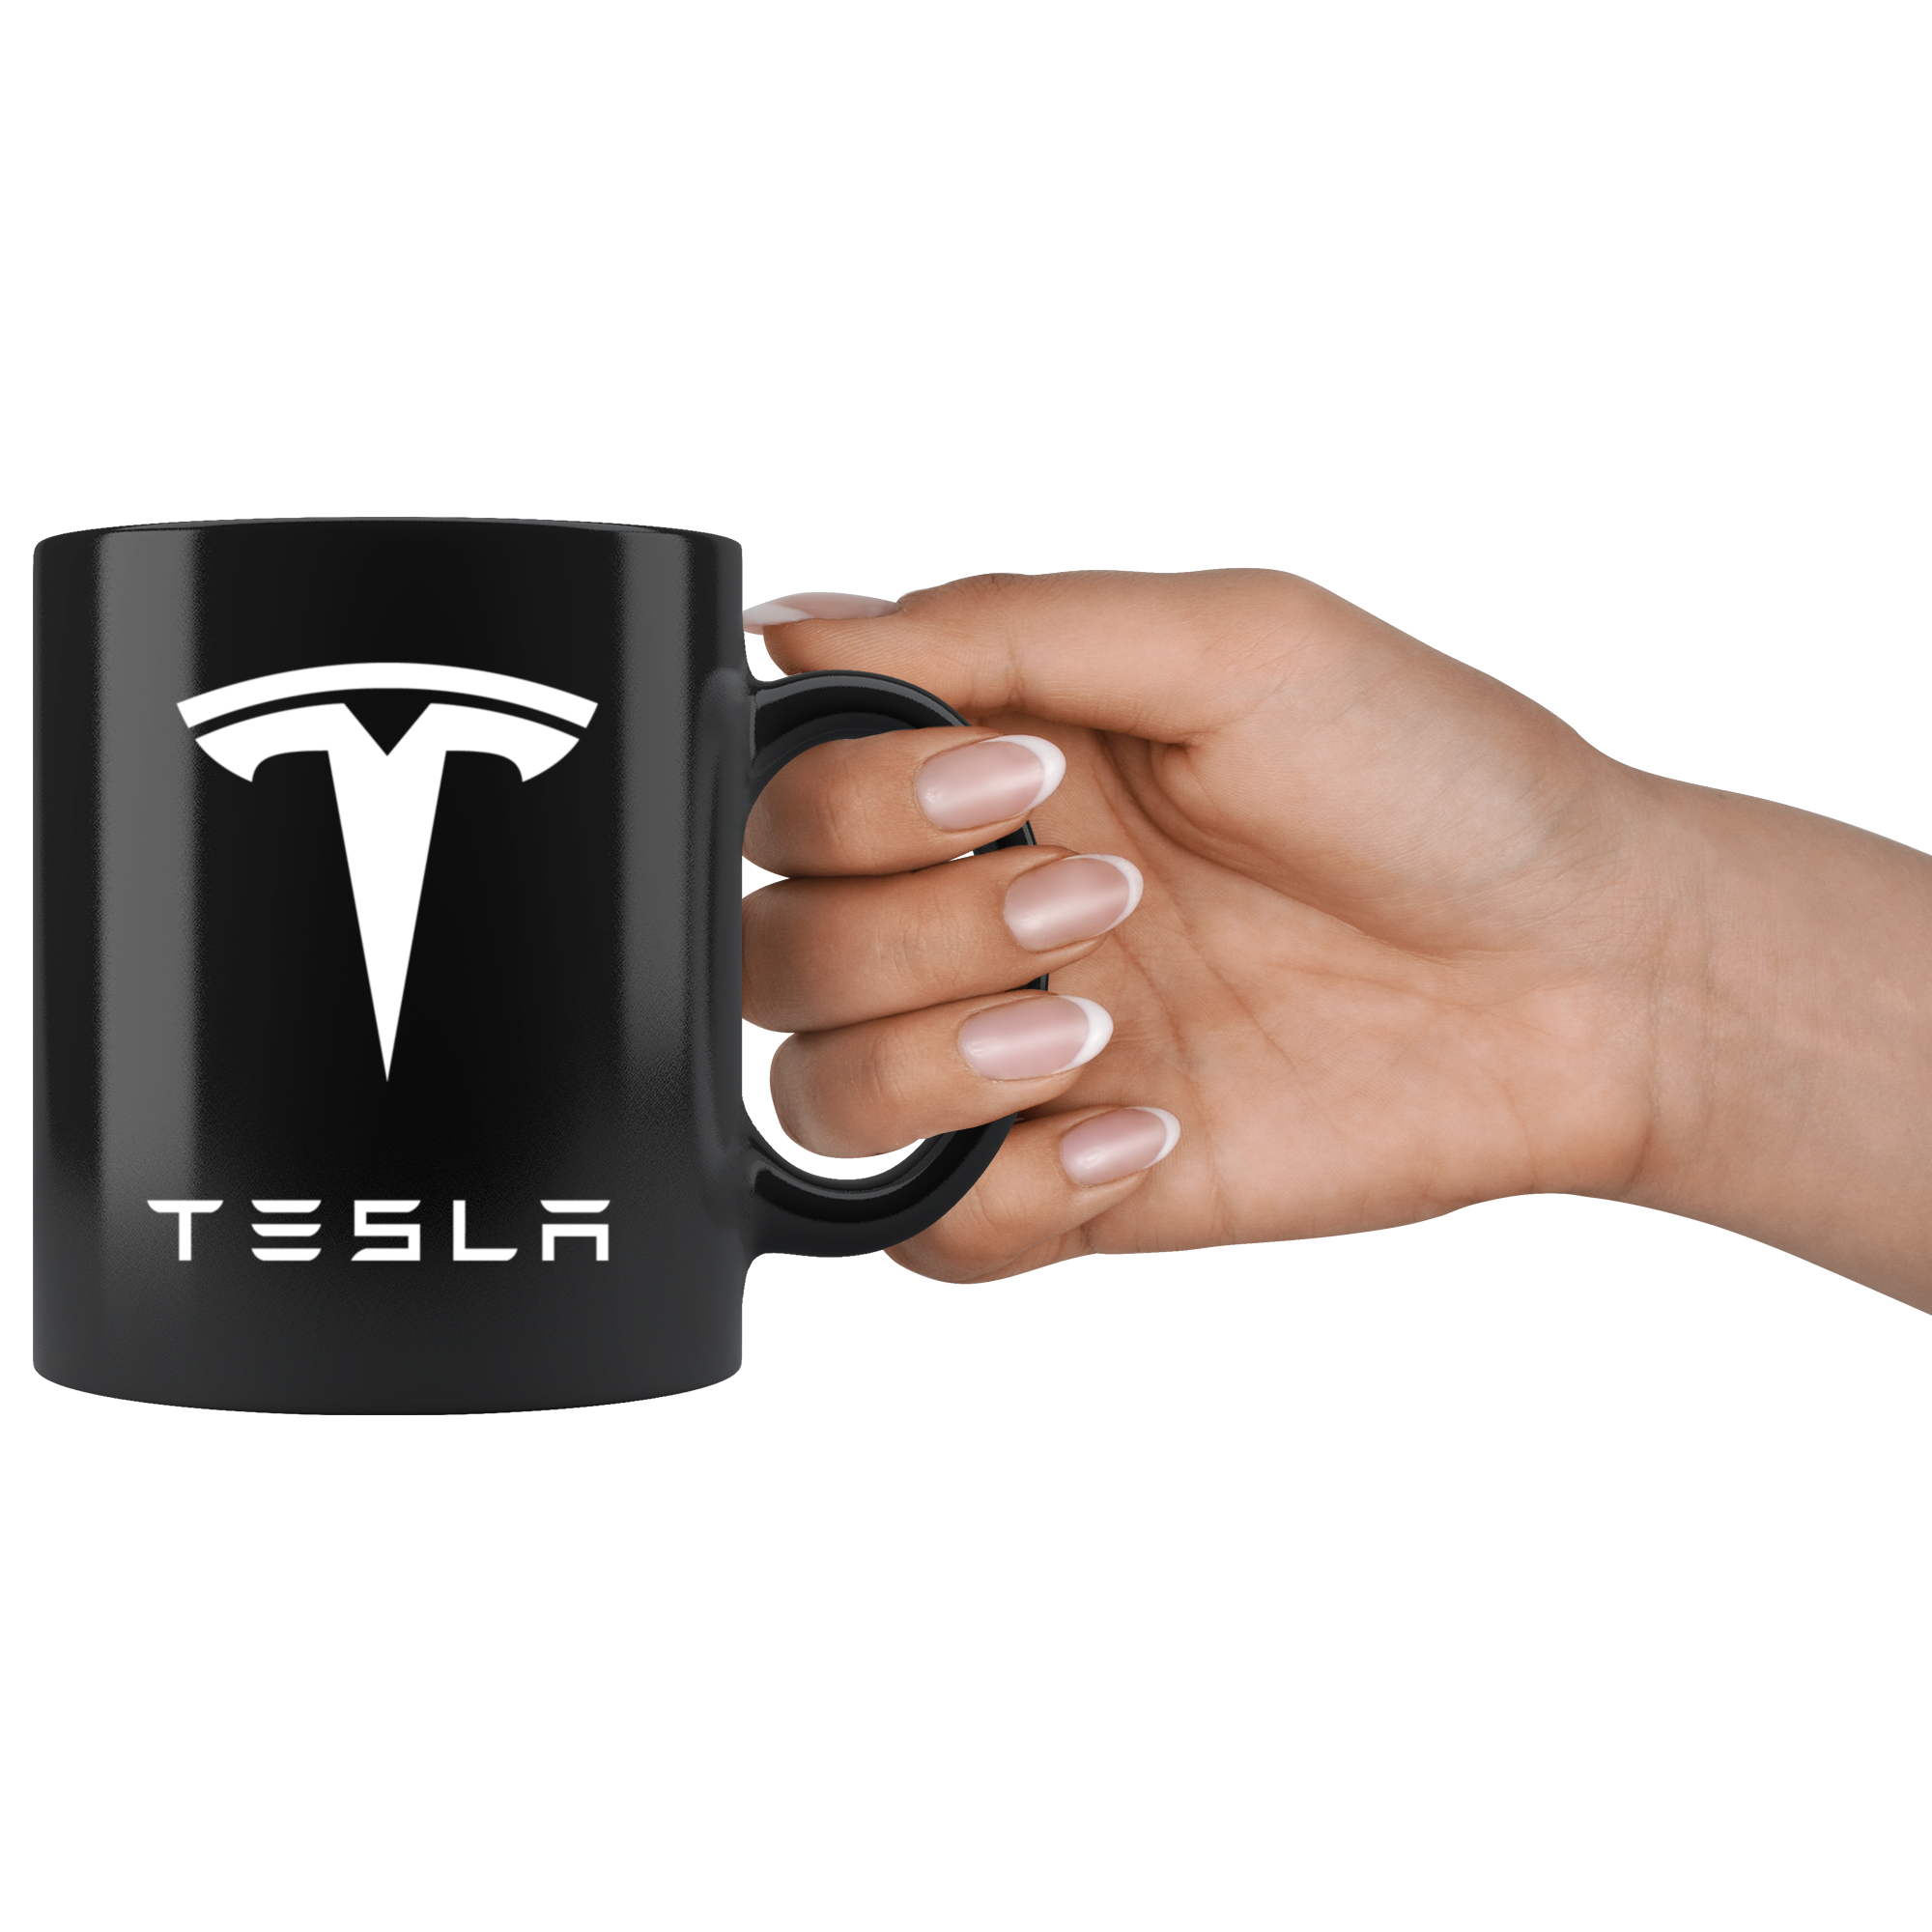 TESLA Coffee Mug - Matte Black, Red Logo Both Sides & Interior (11 oz) Best  Tesla Gifts For Men, Women, Boyfriend, Boss, Dad, Mom, Husband, Wife  Birthday